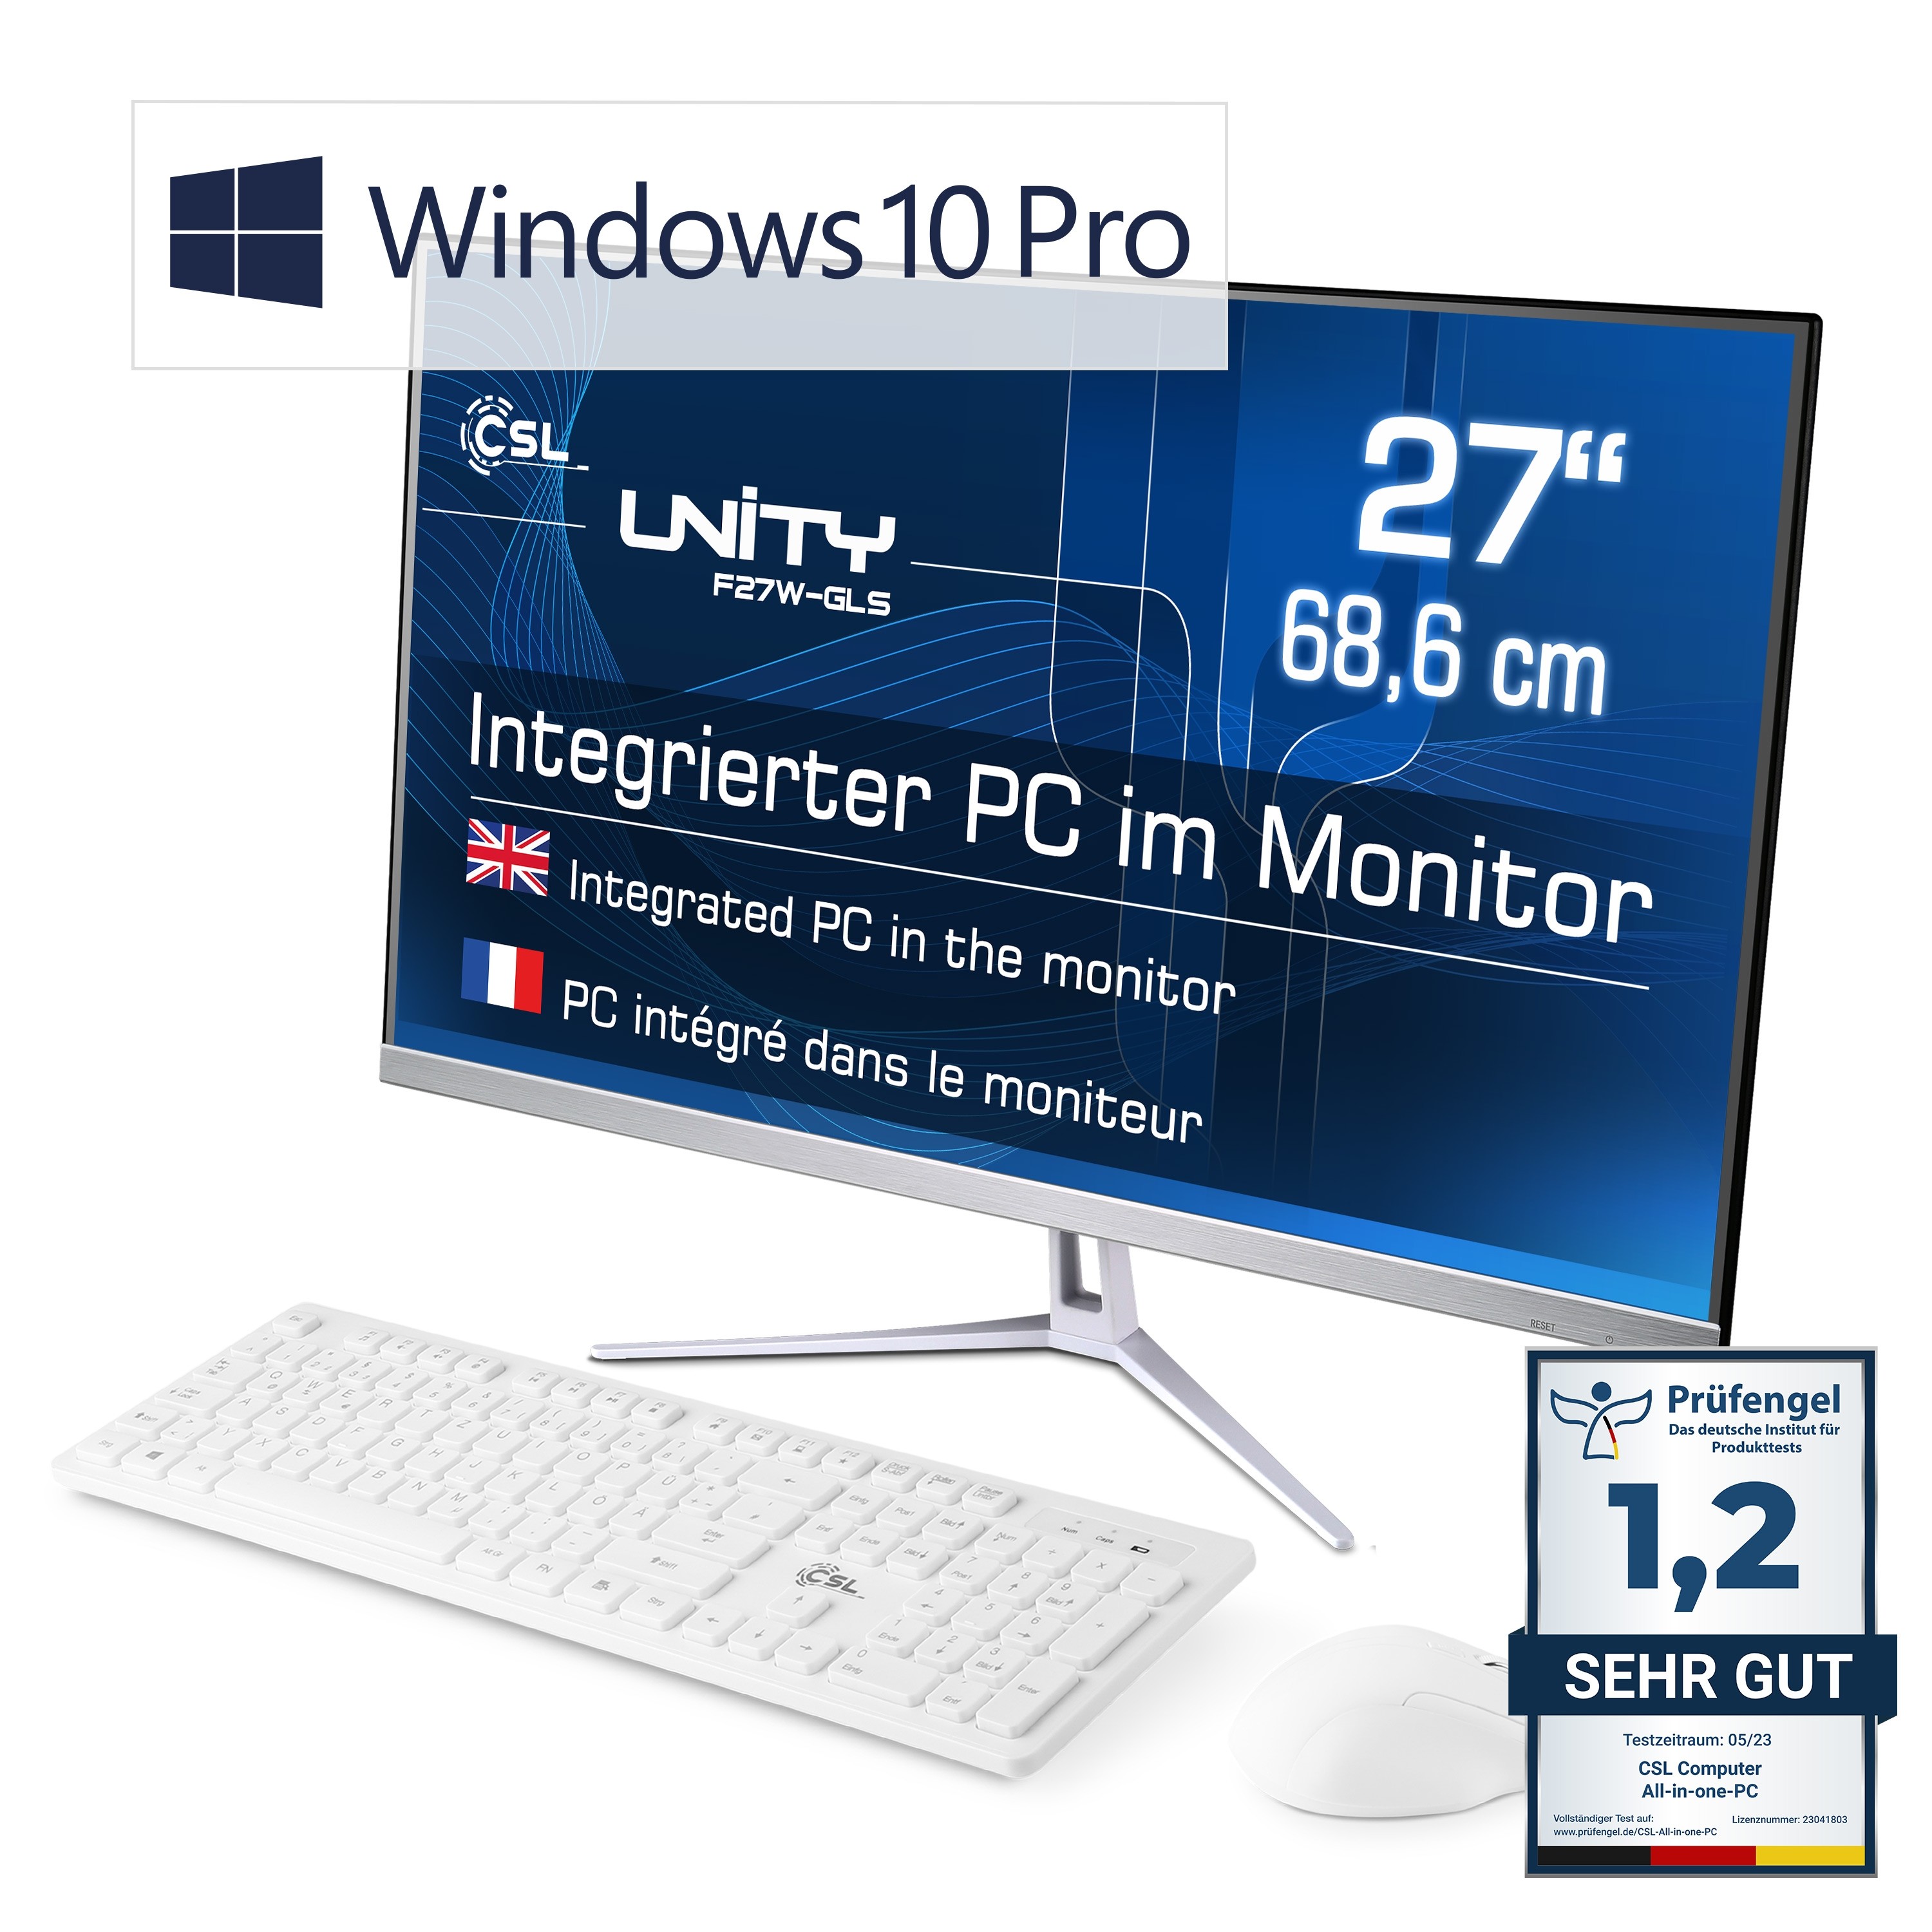 CSL Computer | All-in-One-PC CSL Unity F27W-JLS Pentium / 512 GB / 16 GB RAM  / Windows 10 Pro